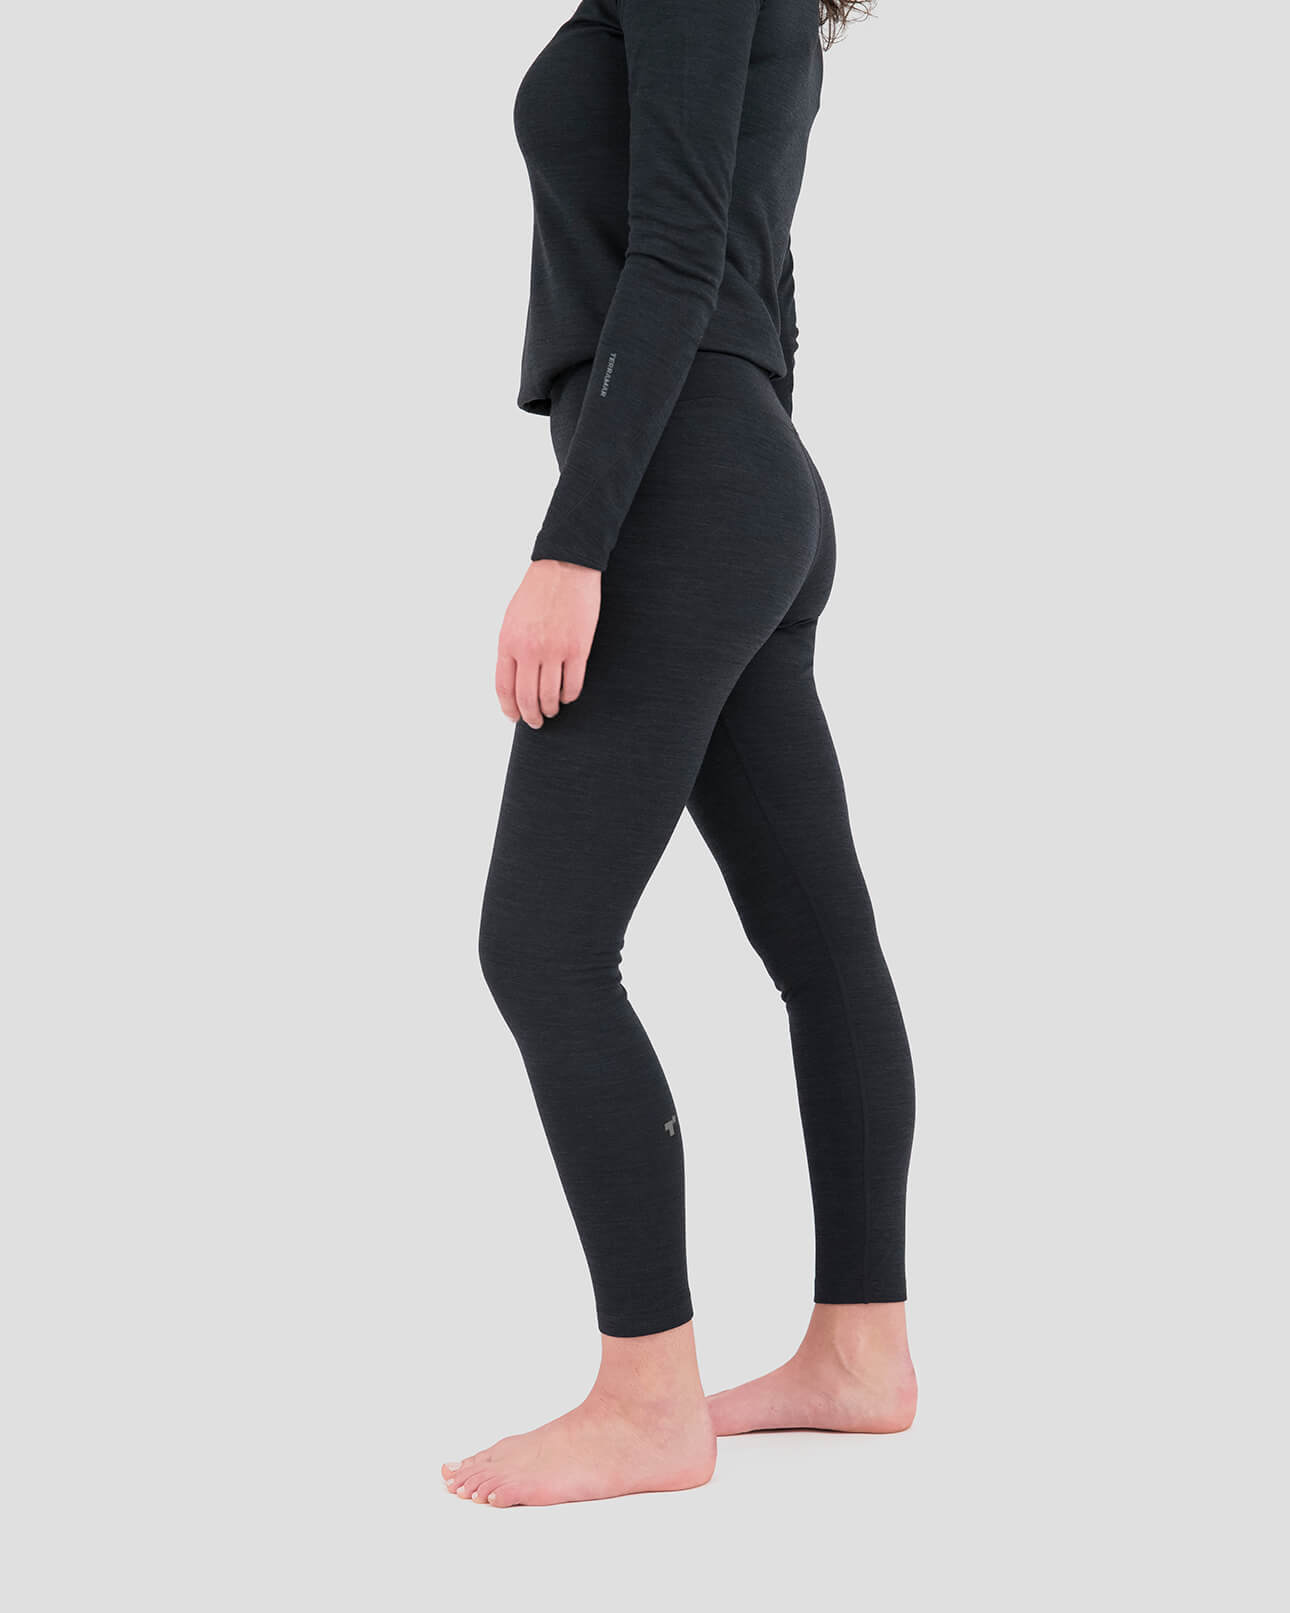 Black Merino Wool Pants - Heavyweight Base Layer, Bottom, Underwear